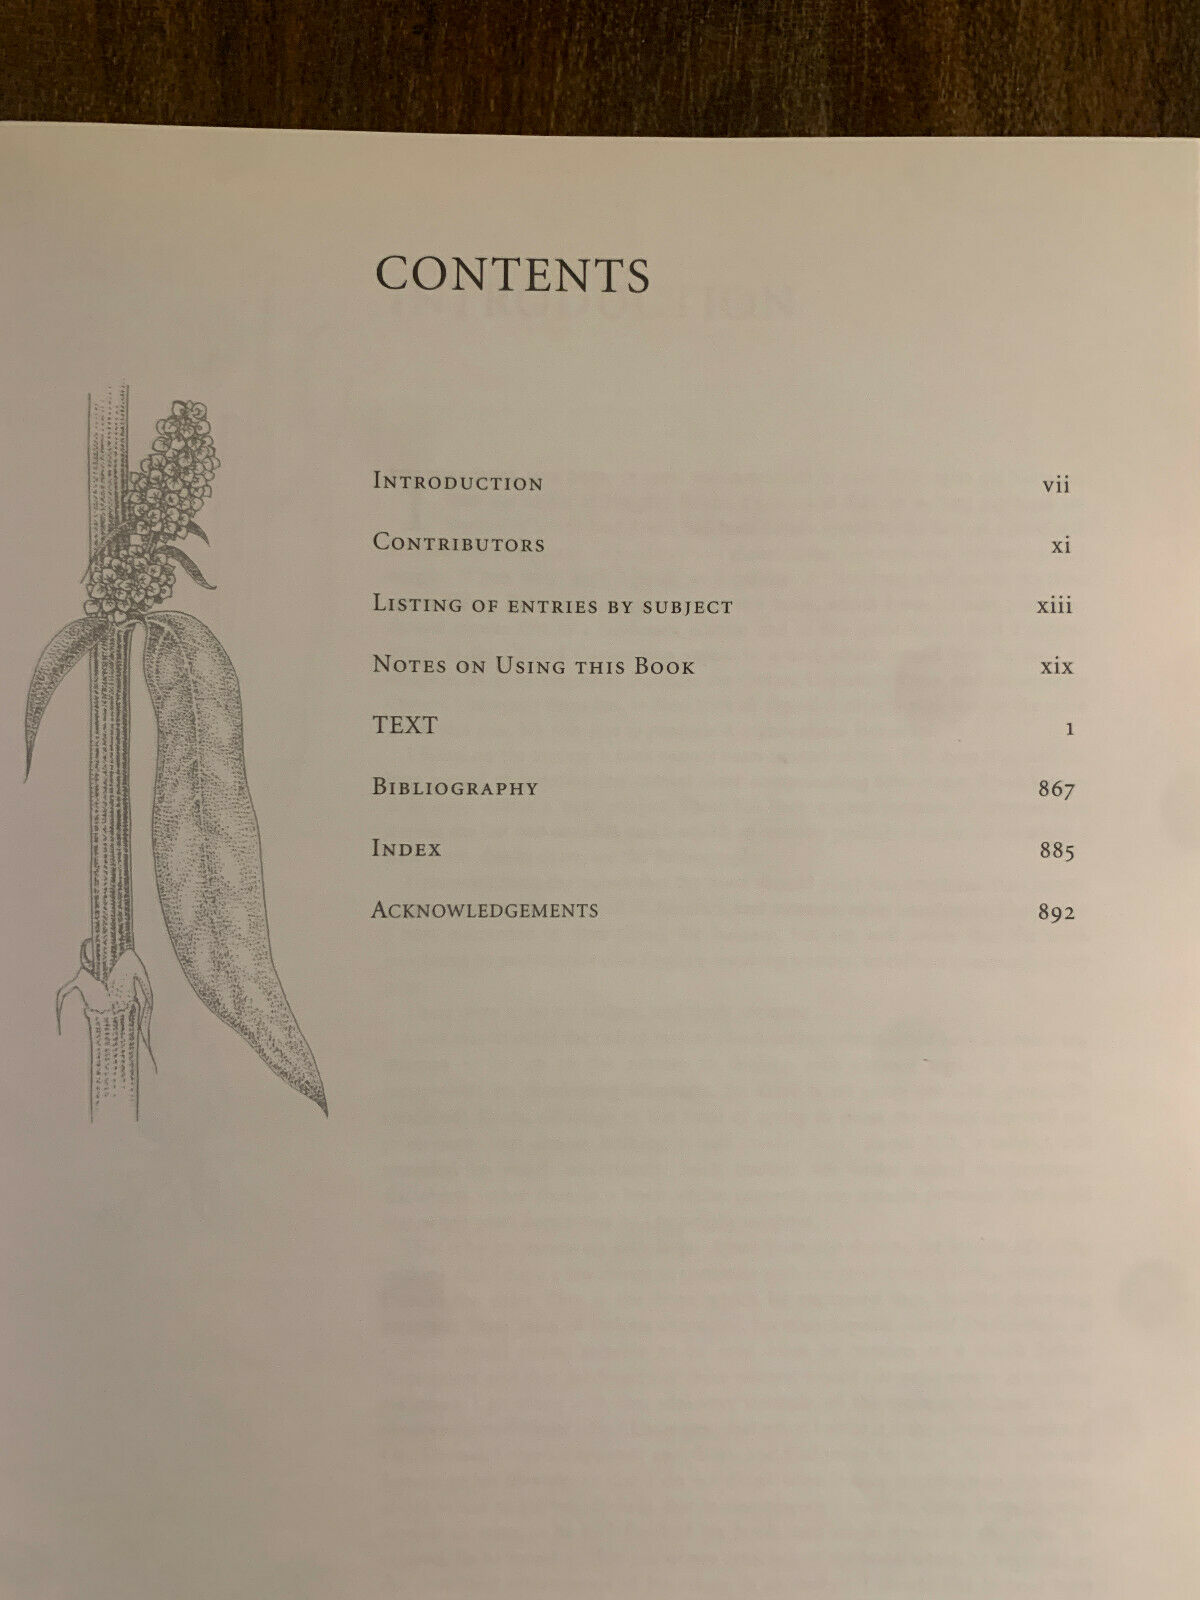 The Oxford Companion to Food by Alan Davidson, 1999